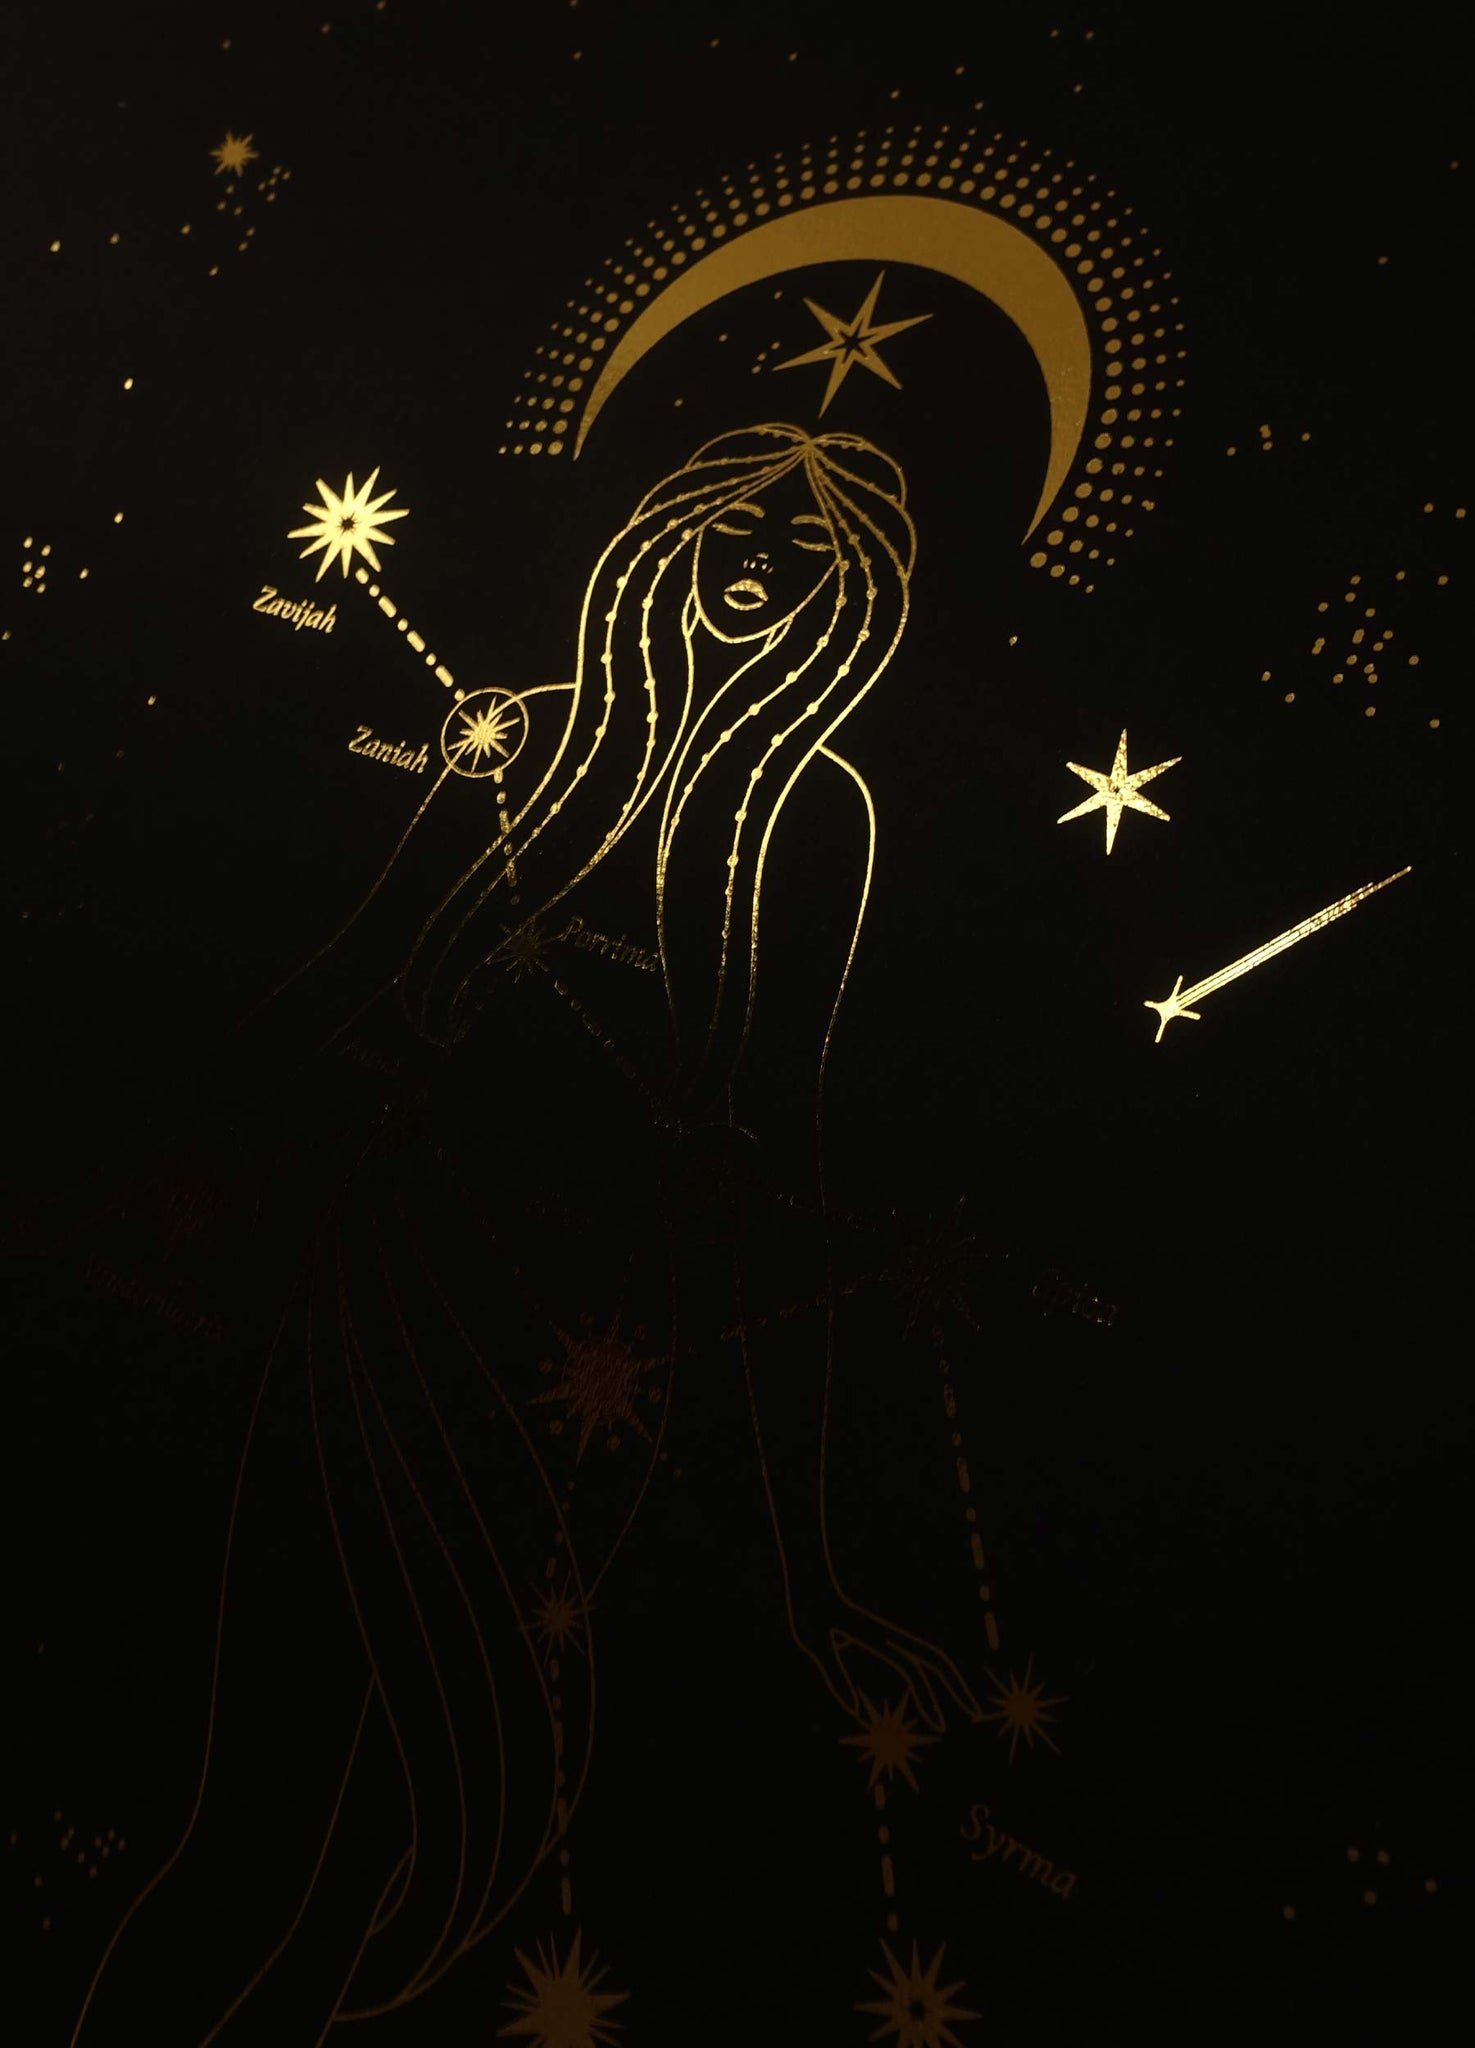 Virgo Constellation gold foil art print on black paper by Cocorrina & design studio and shop